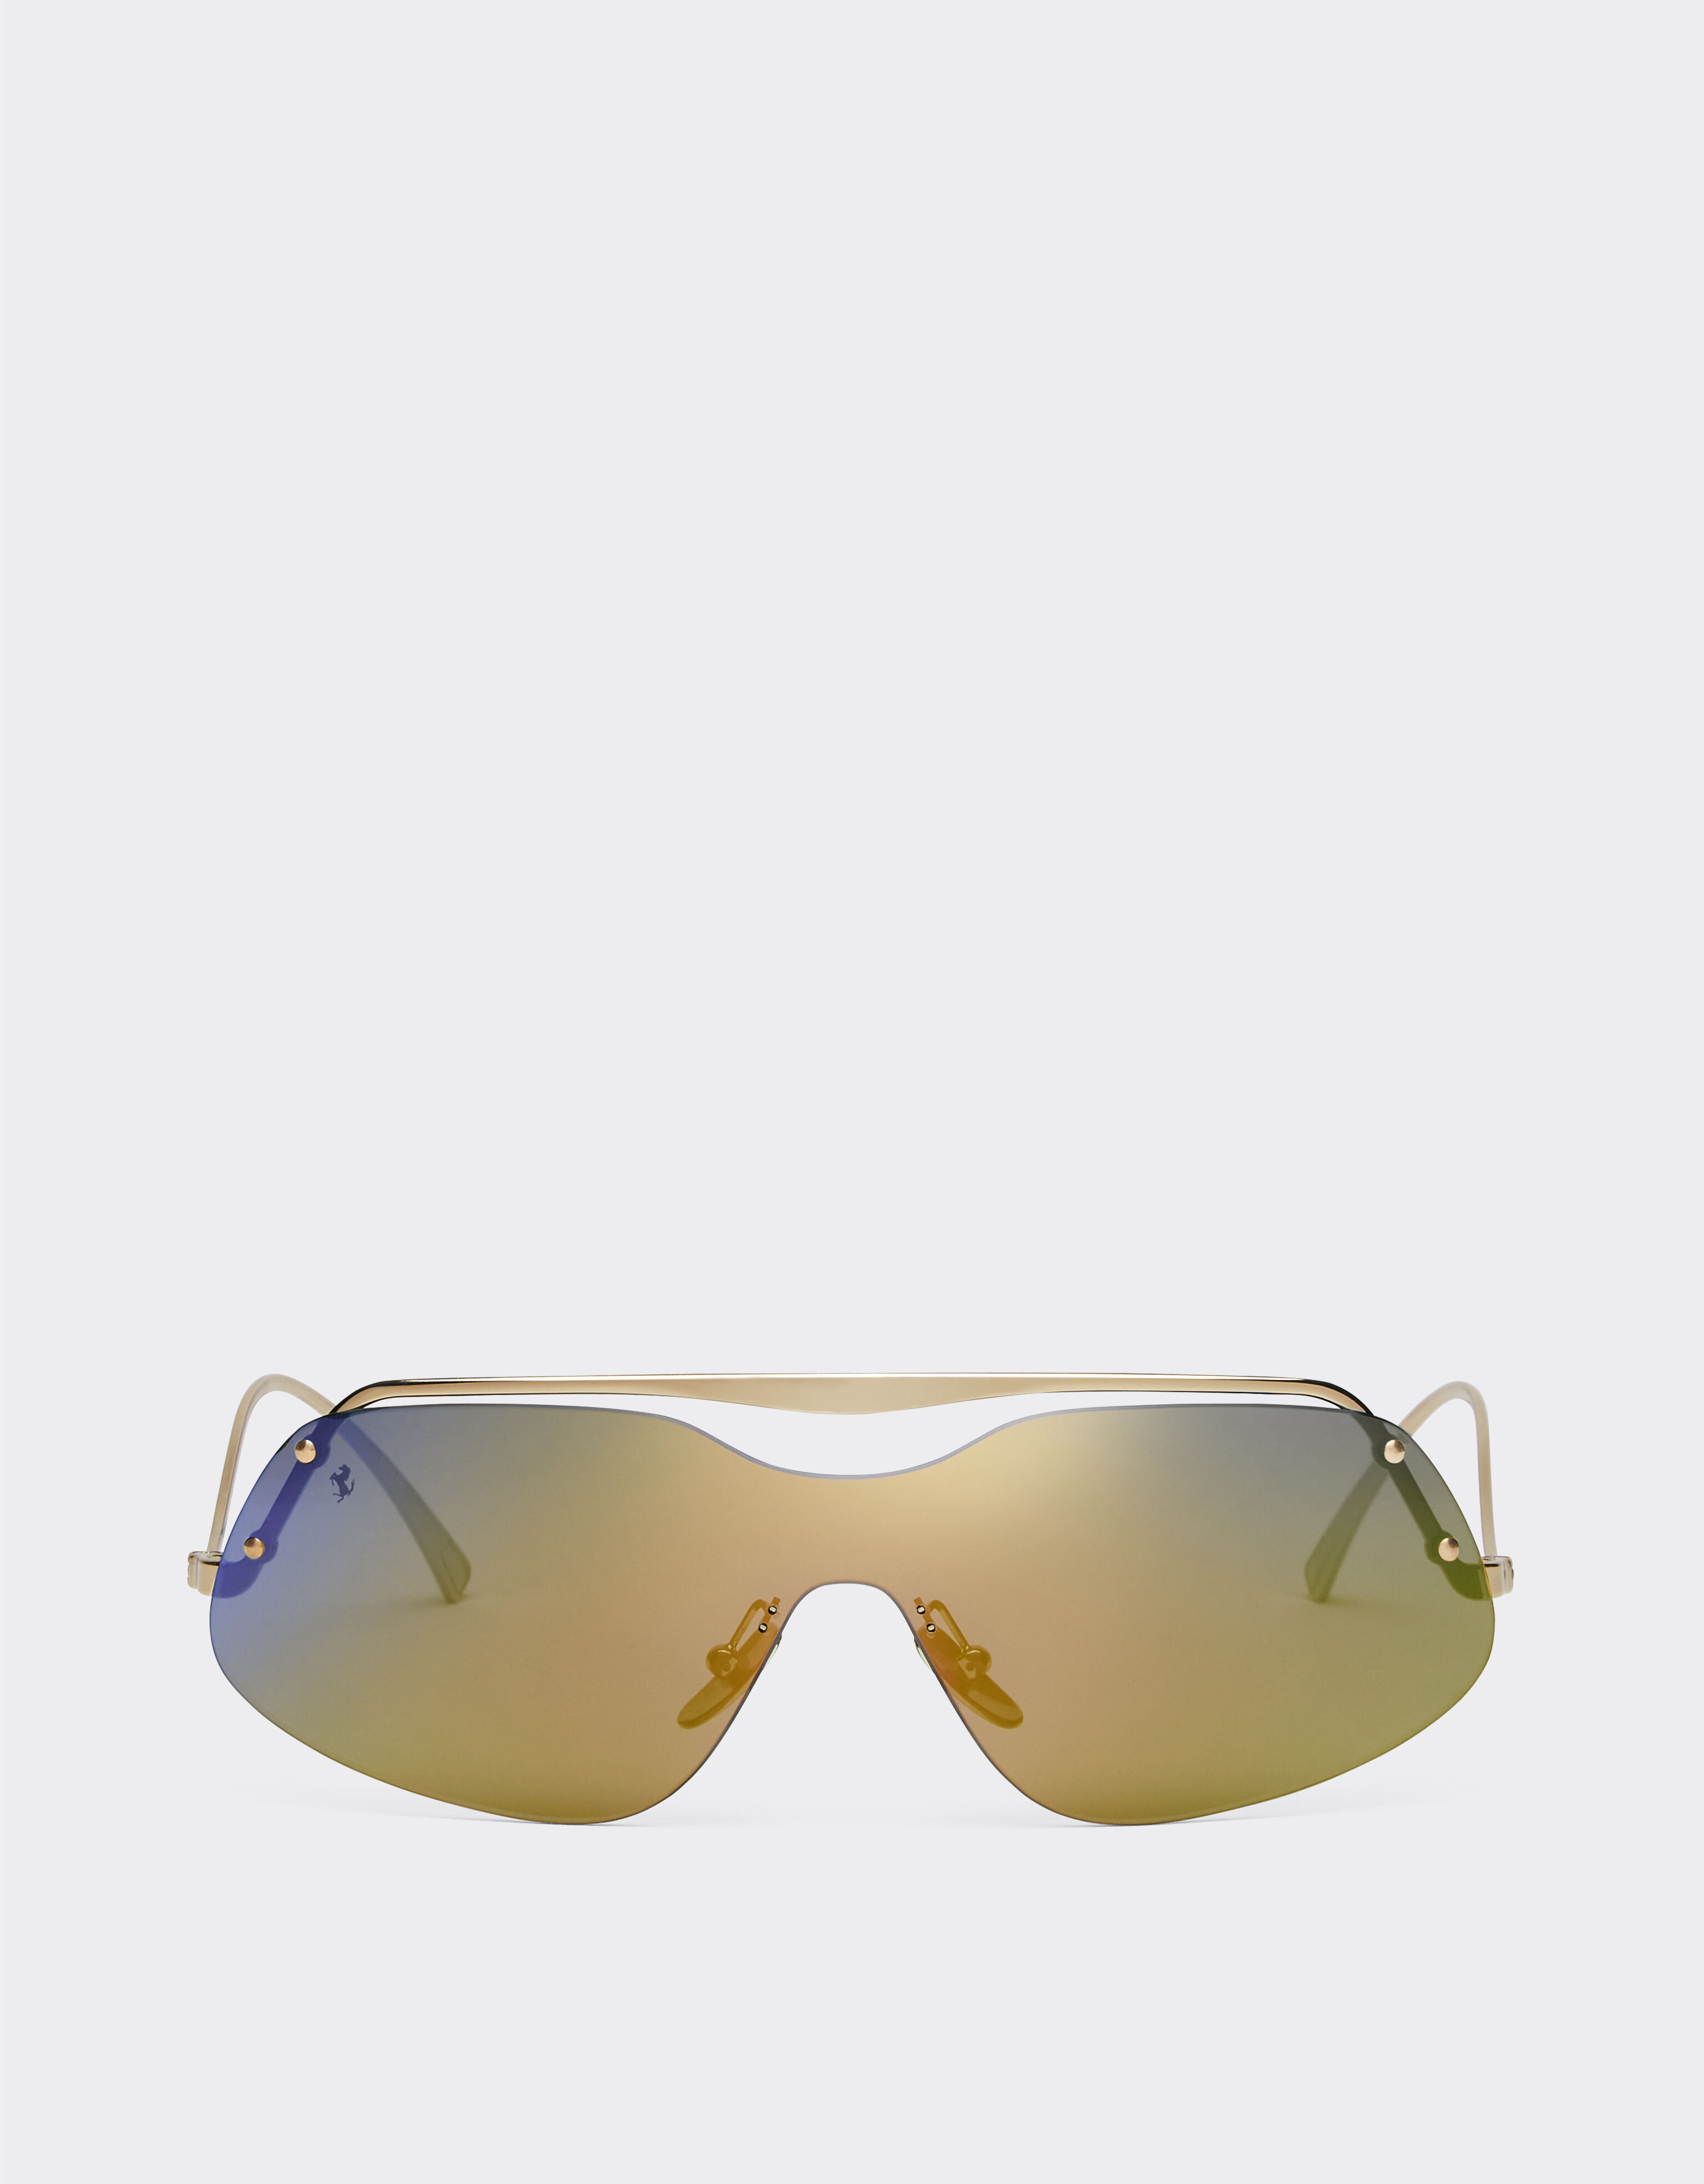 ${brand} Ferrari sunglasses in gold-tone metal with blue mirror gold lenses ${colorDescription} ${masterID}